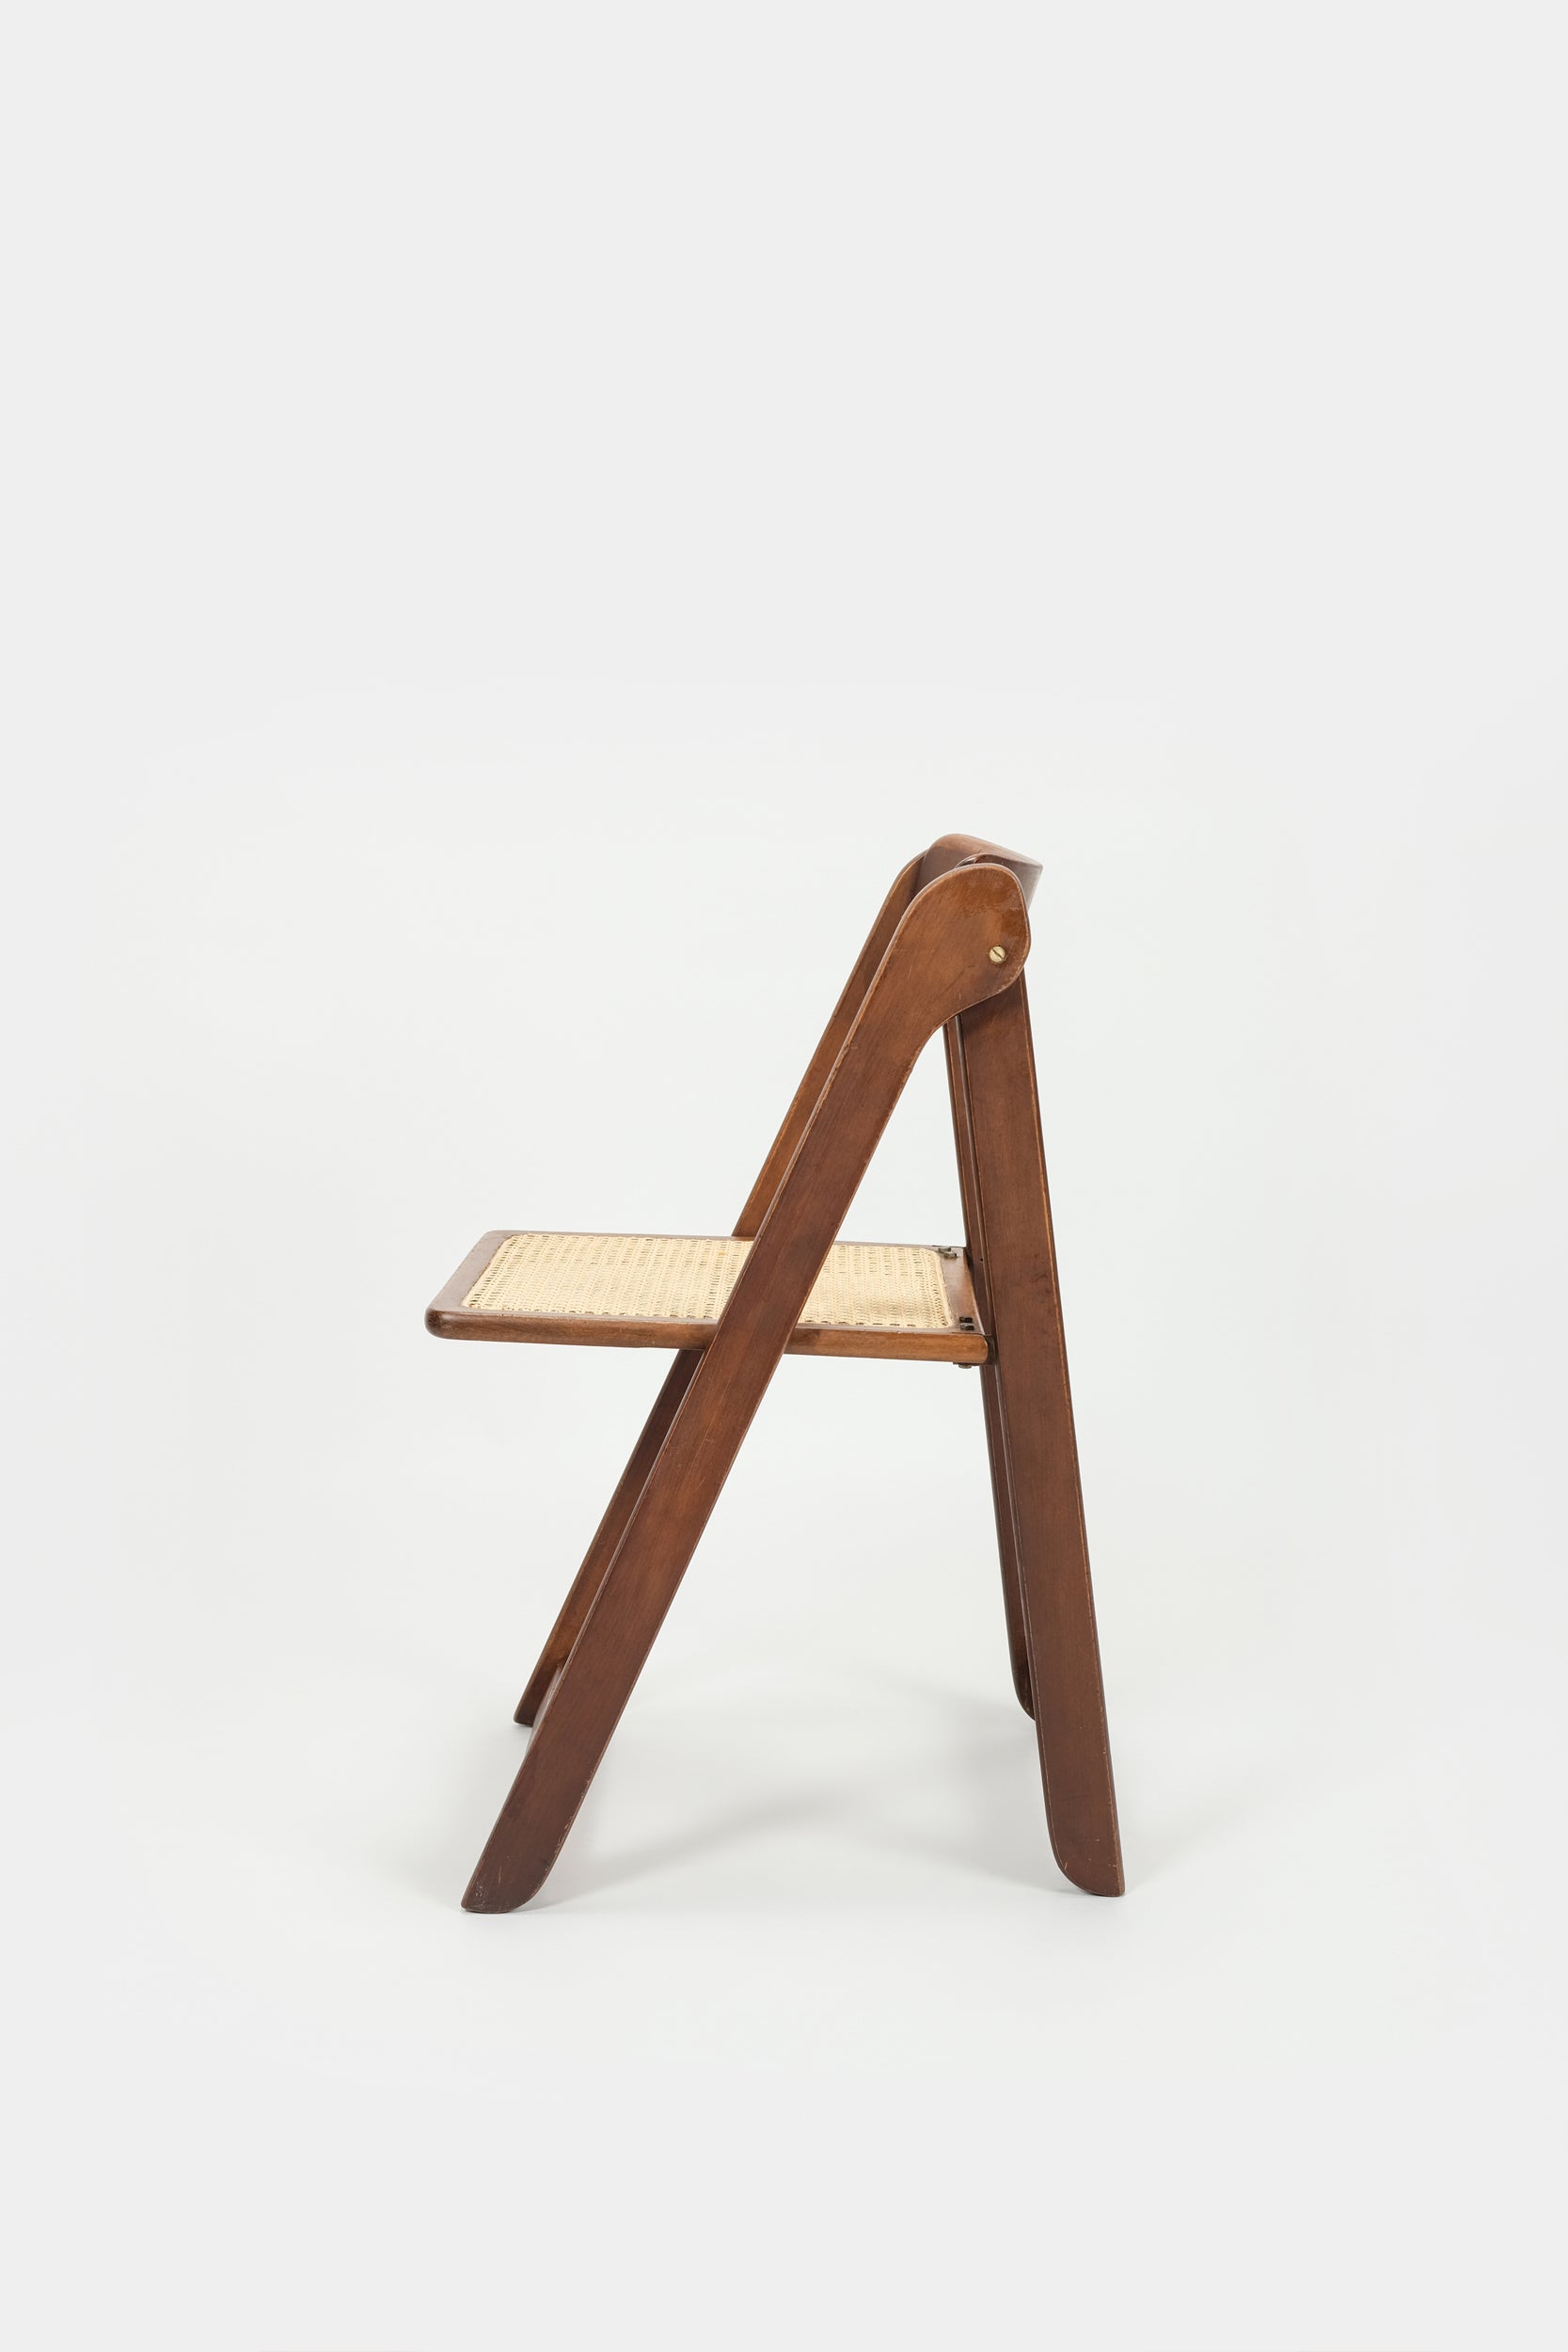 Aldo Jacober, Set of 2 chairs "Trieste", Alberto Bazzani, 60s